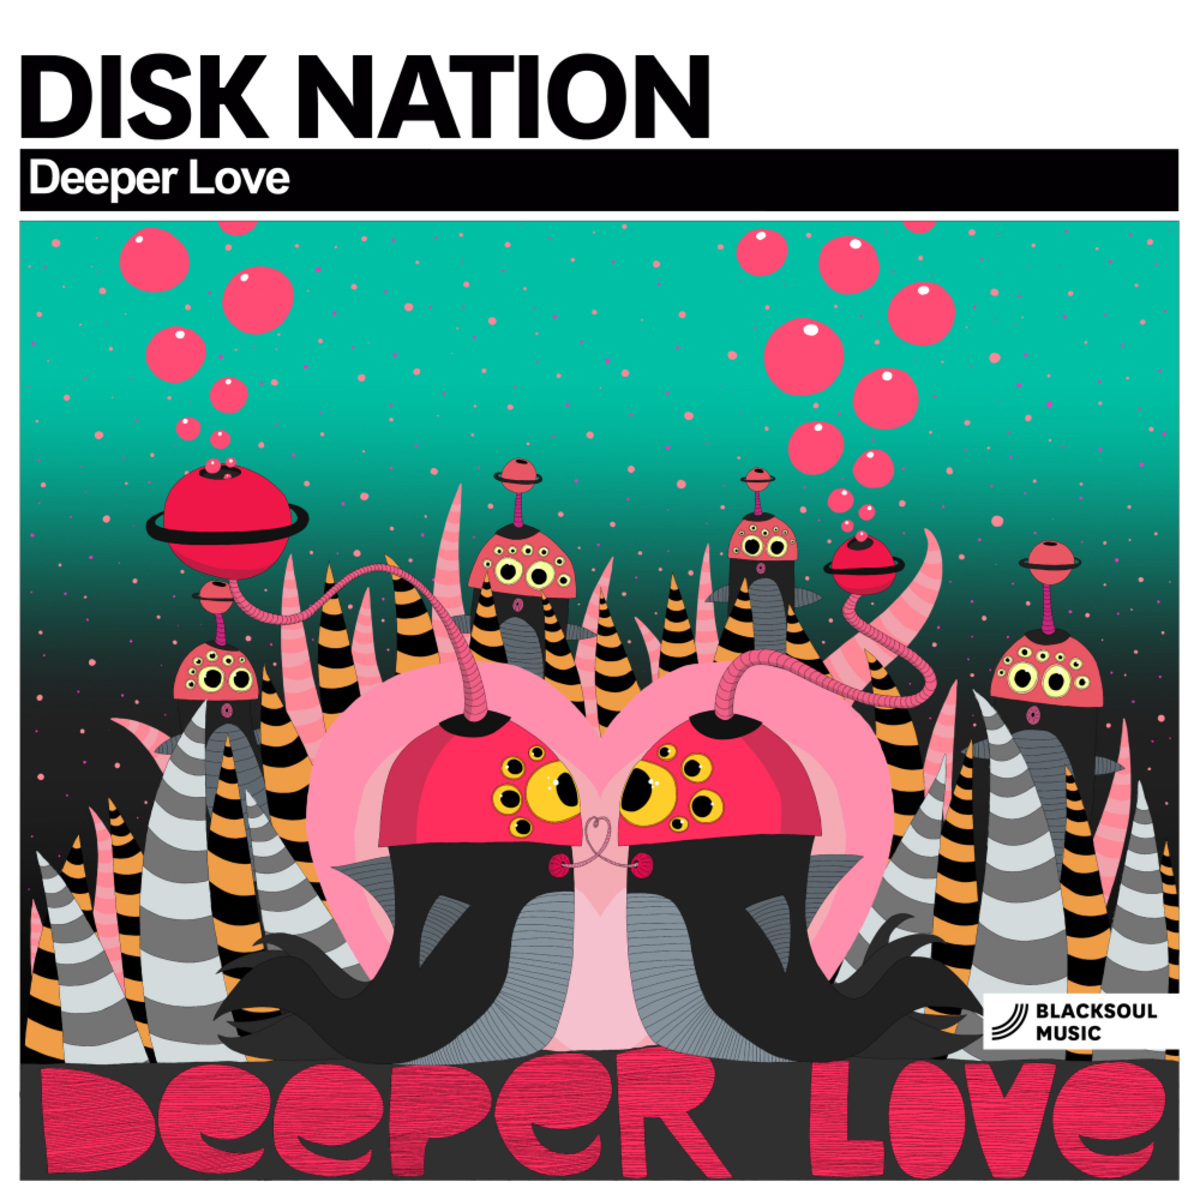 Disk nation - Deeper Love / Blacksoul Music